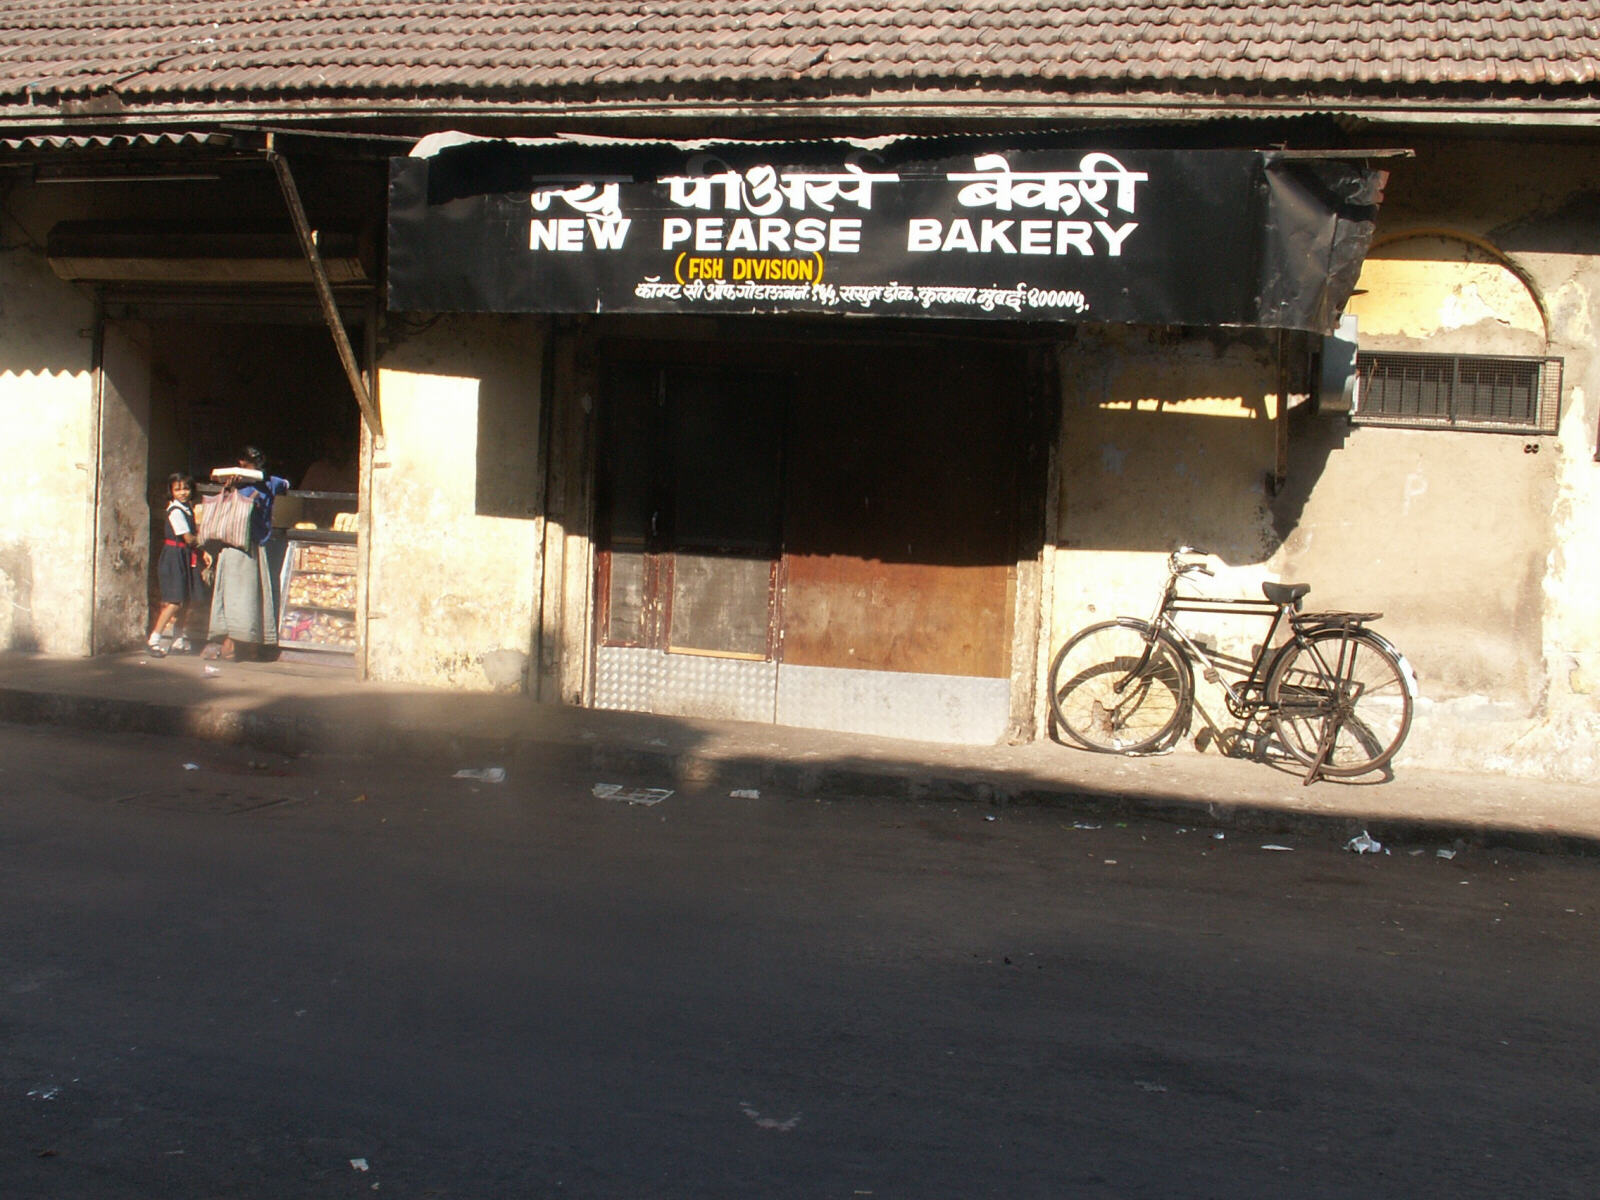 The 'fish division' of a bakery in Bombay / Mumbai